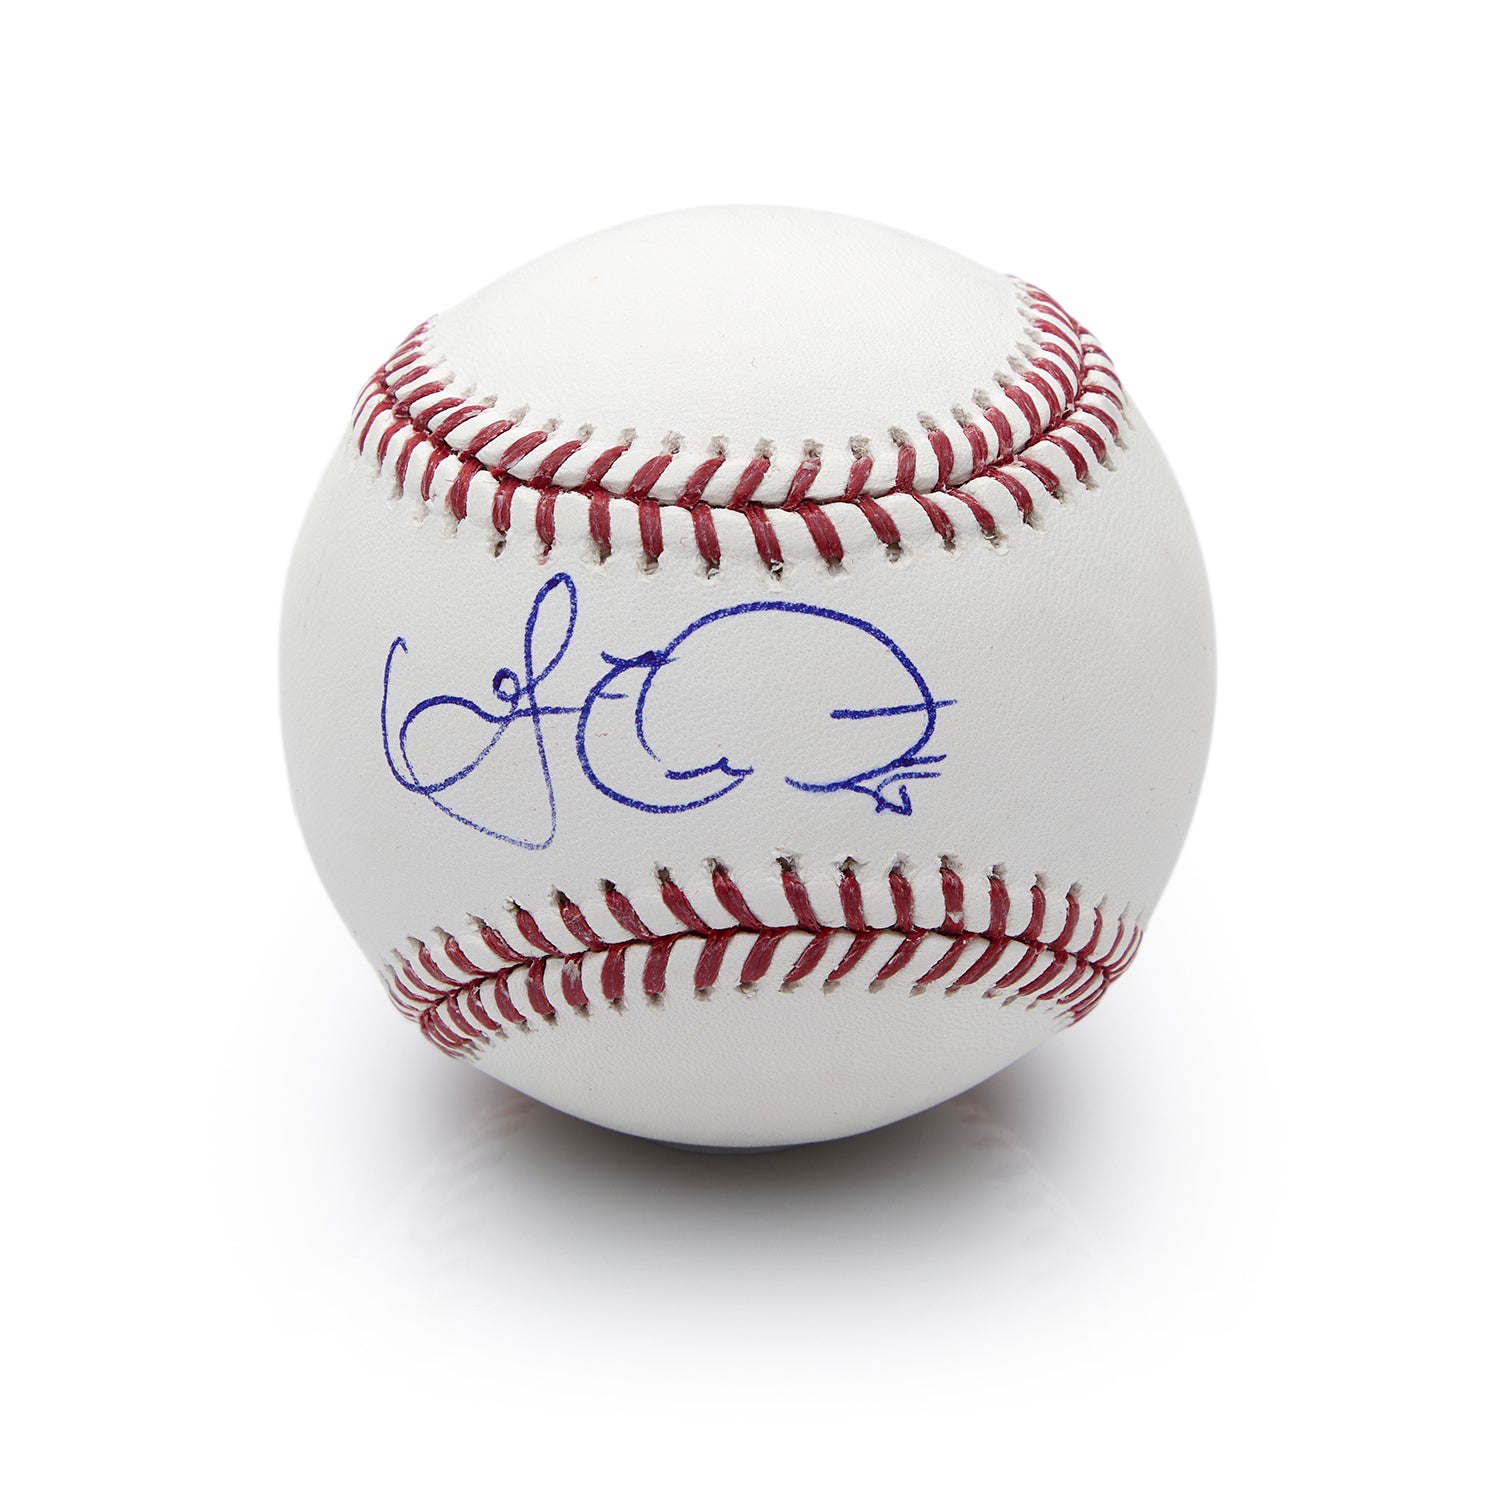 Marco Estrada Autographed Official MLB Major League Baseball